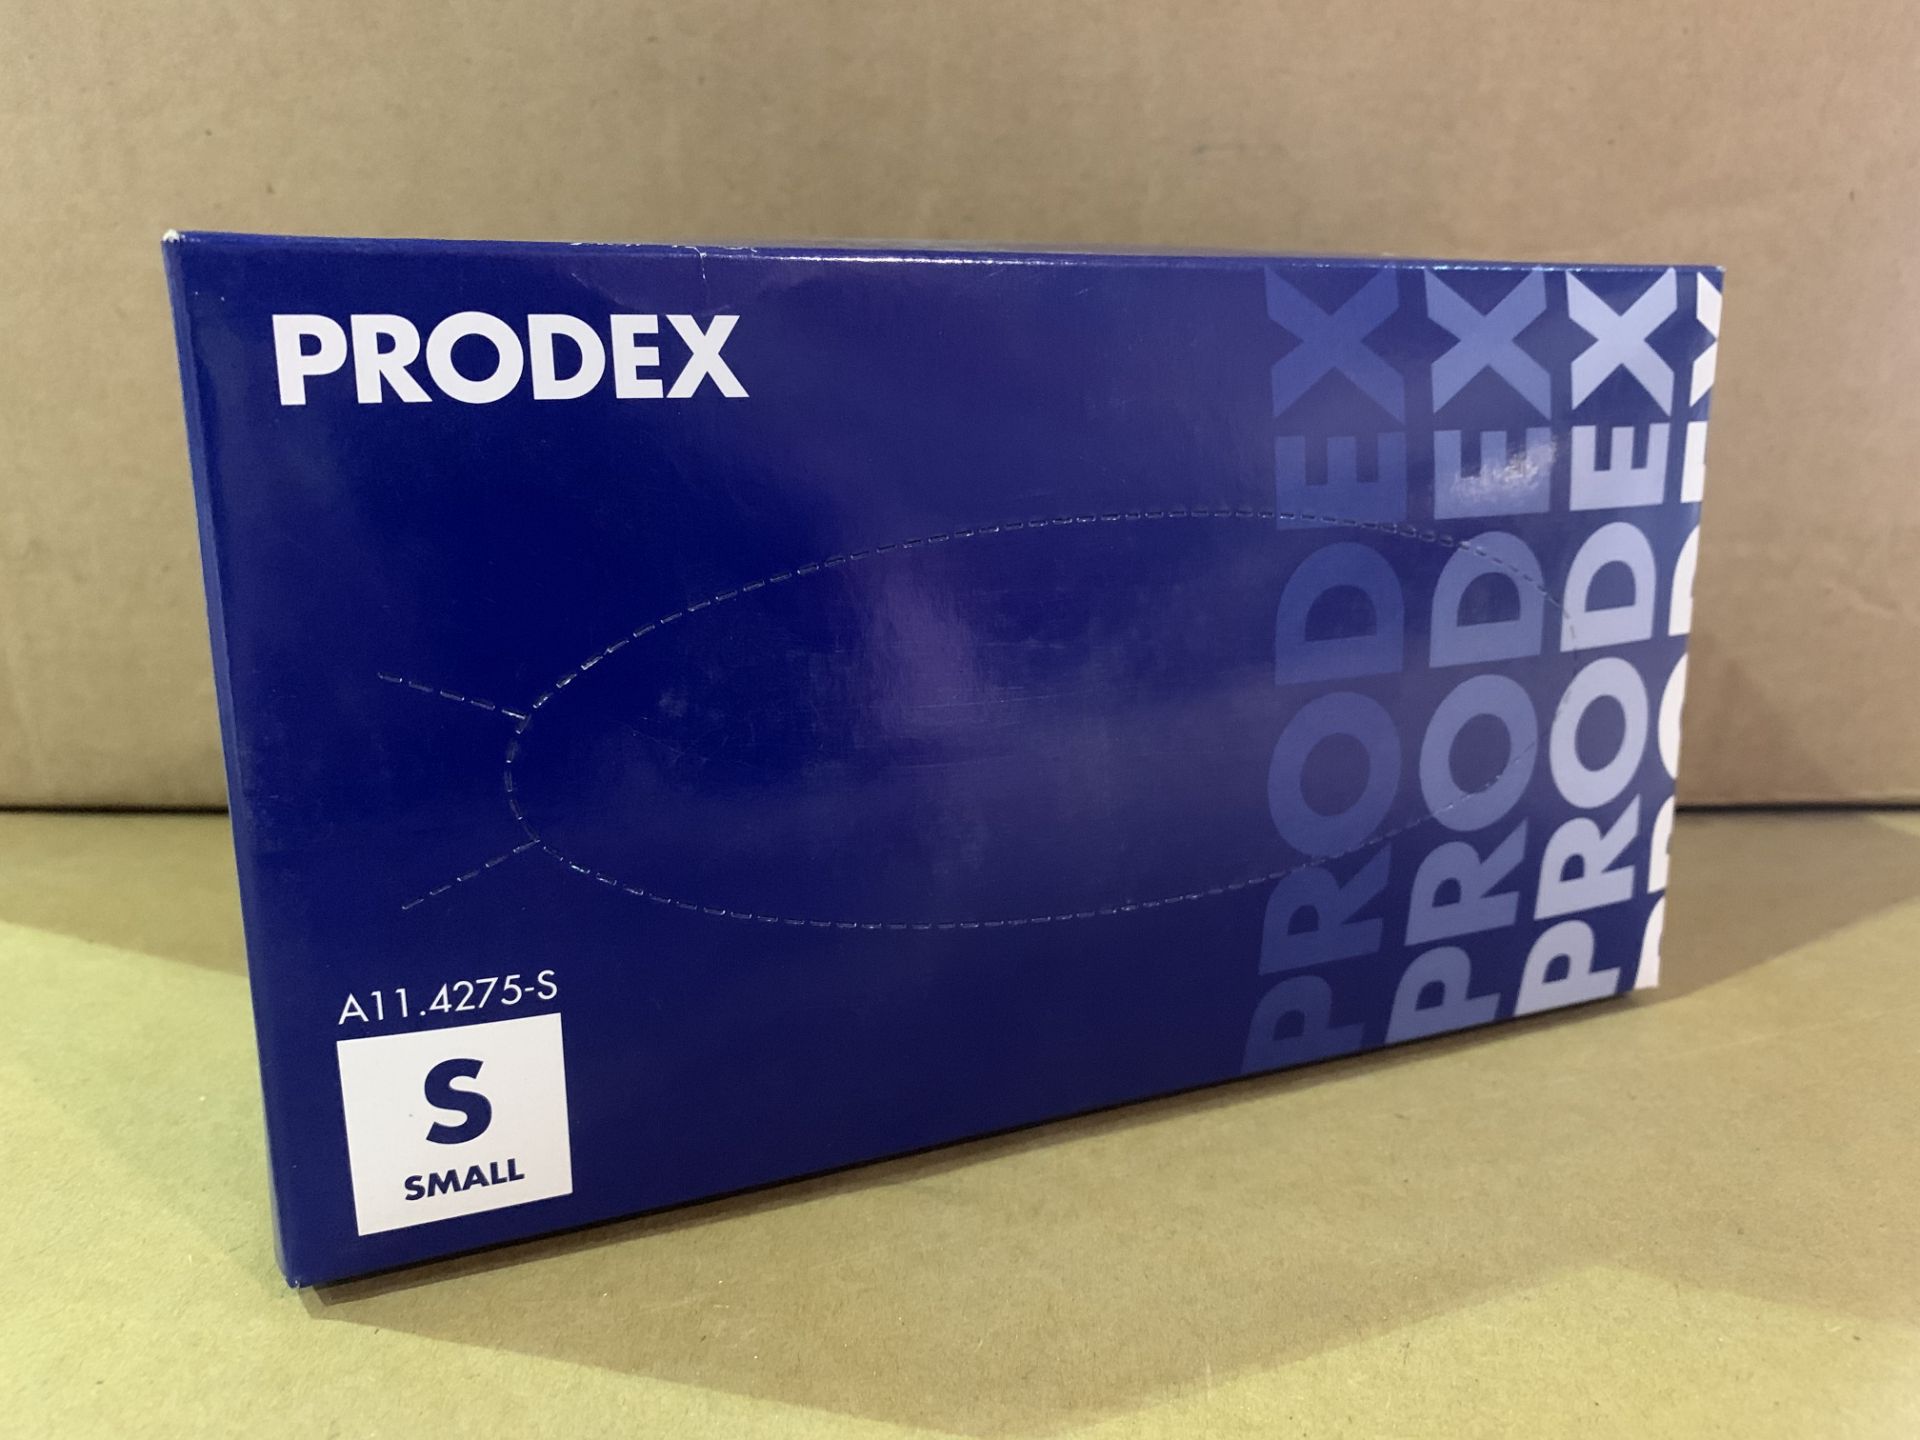 10 X PACKS OF 100 PRODEX VINYL DISPOSABLE GLOVES POWDERED BLUE